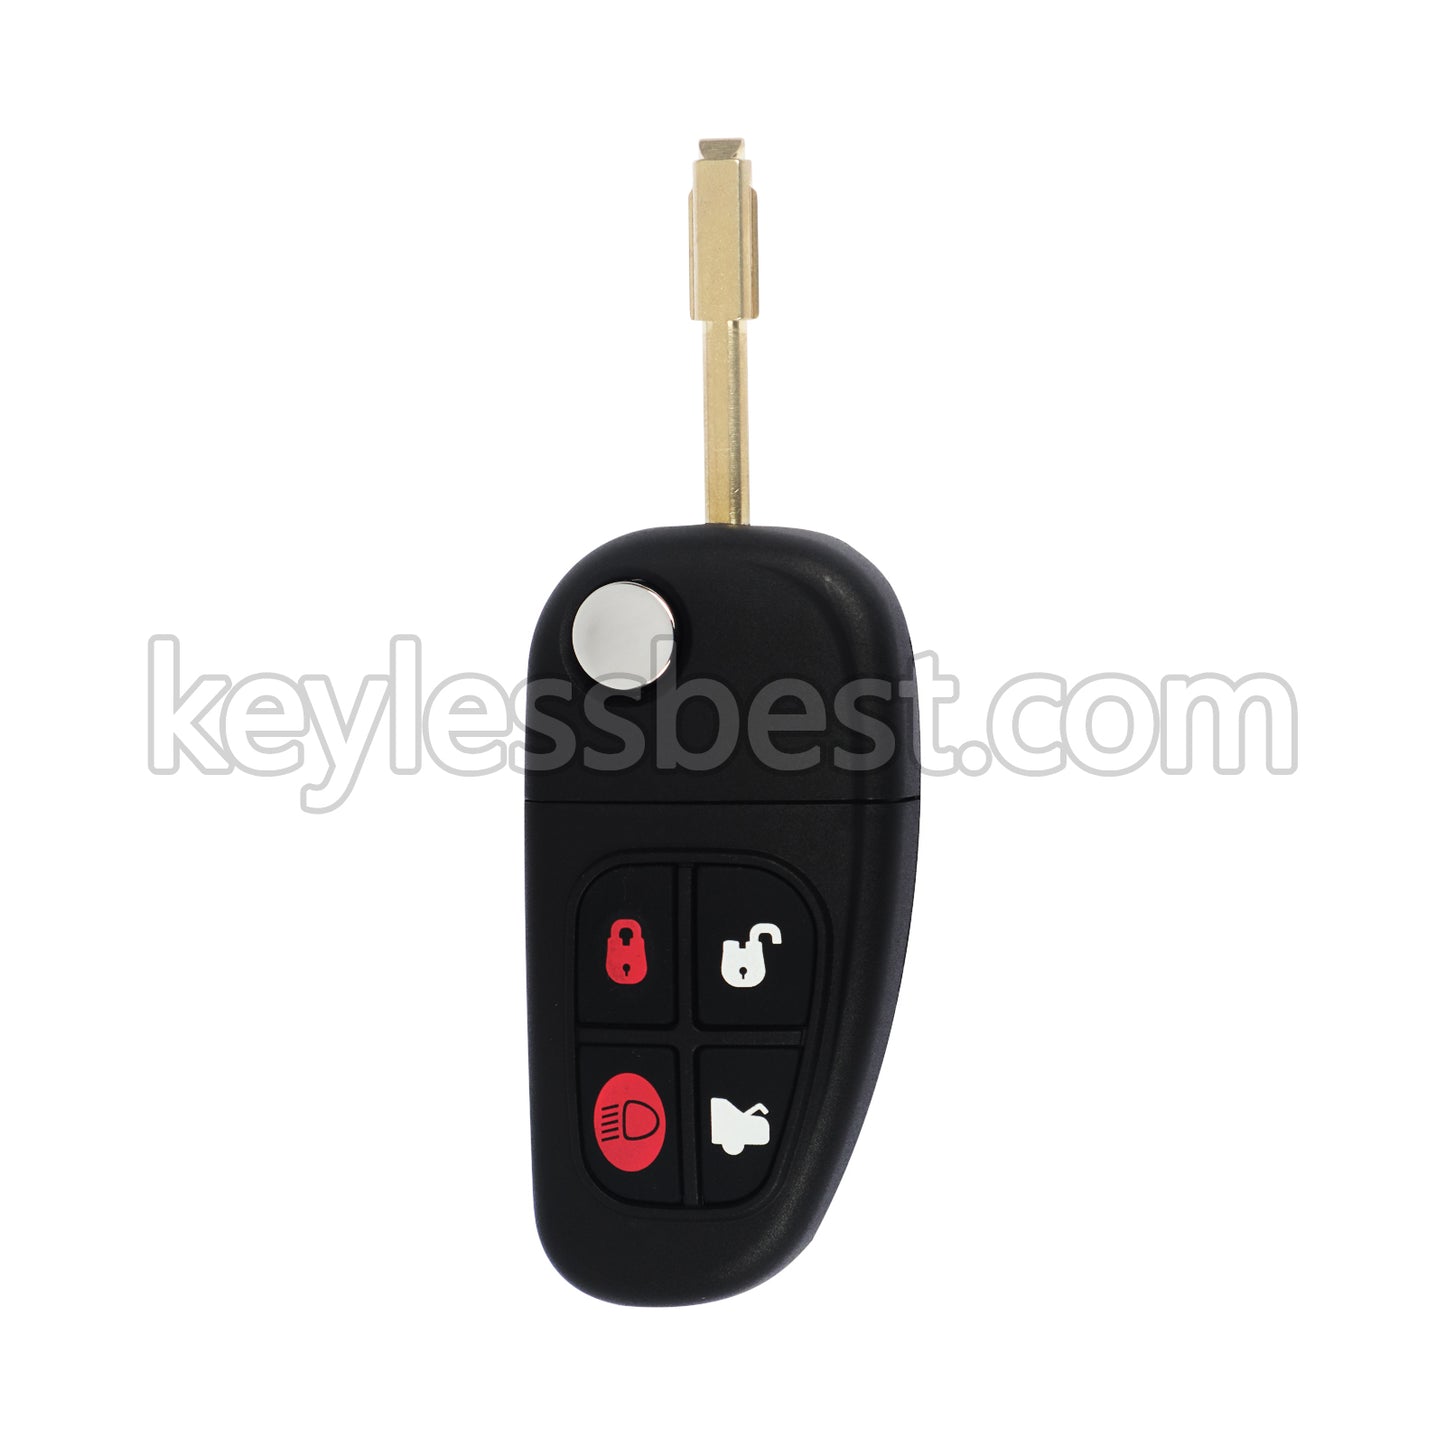 2001 - 2008 Jaguar S-Type XJ8 X-Type / 4 Buttons Remote Key / NHVWB1U241 NHVWBIU241 CWTWB1U243 / 315MHz